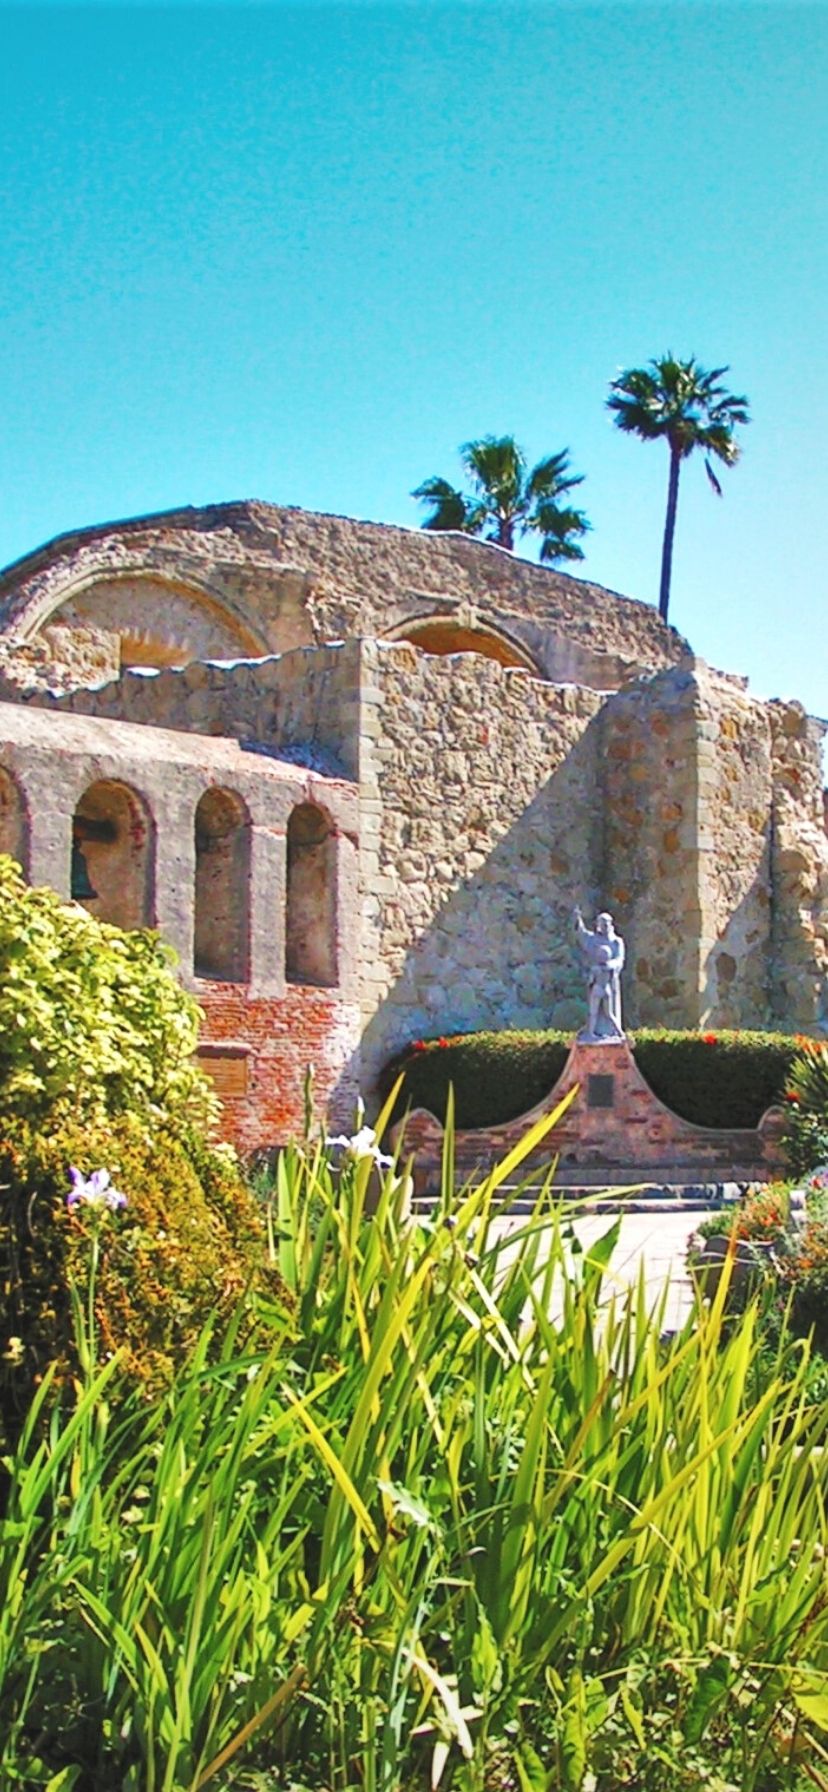 Mission San Juan Capistrano - Best California Missions